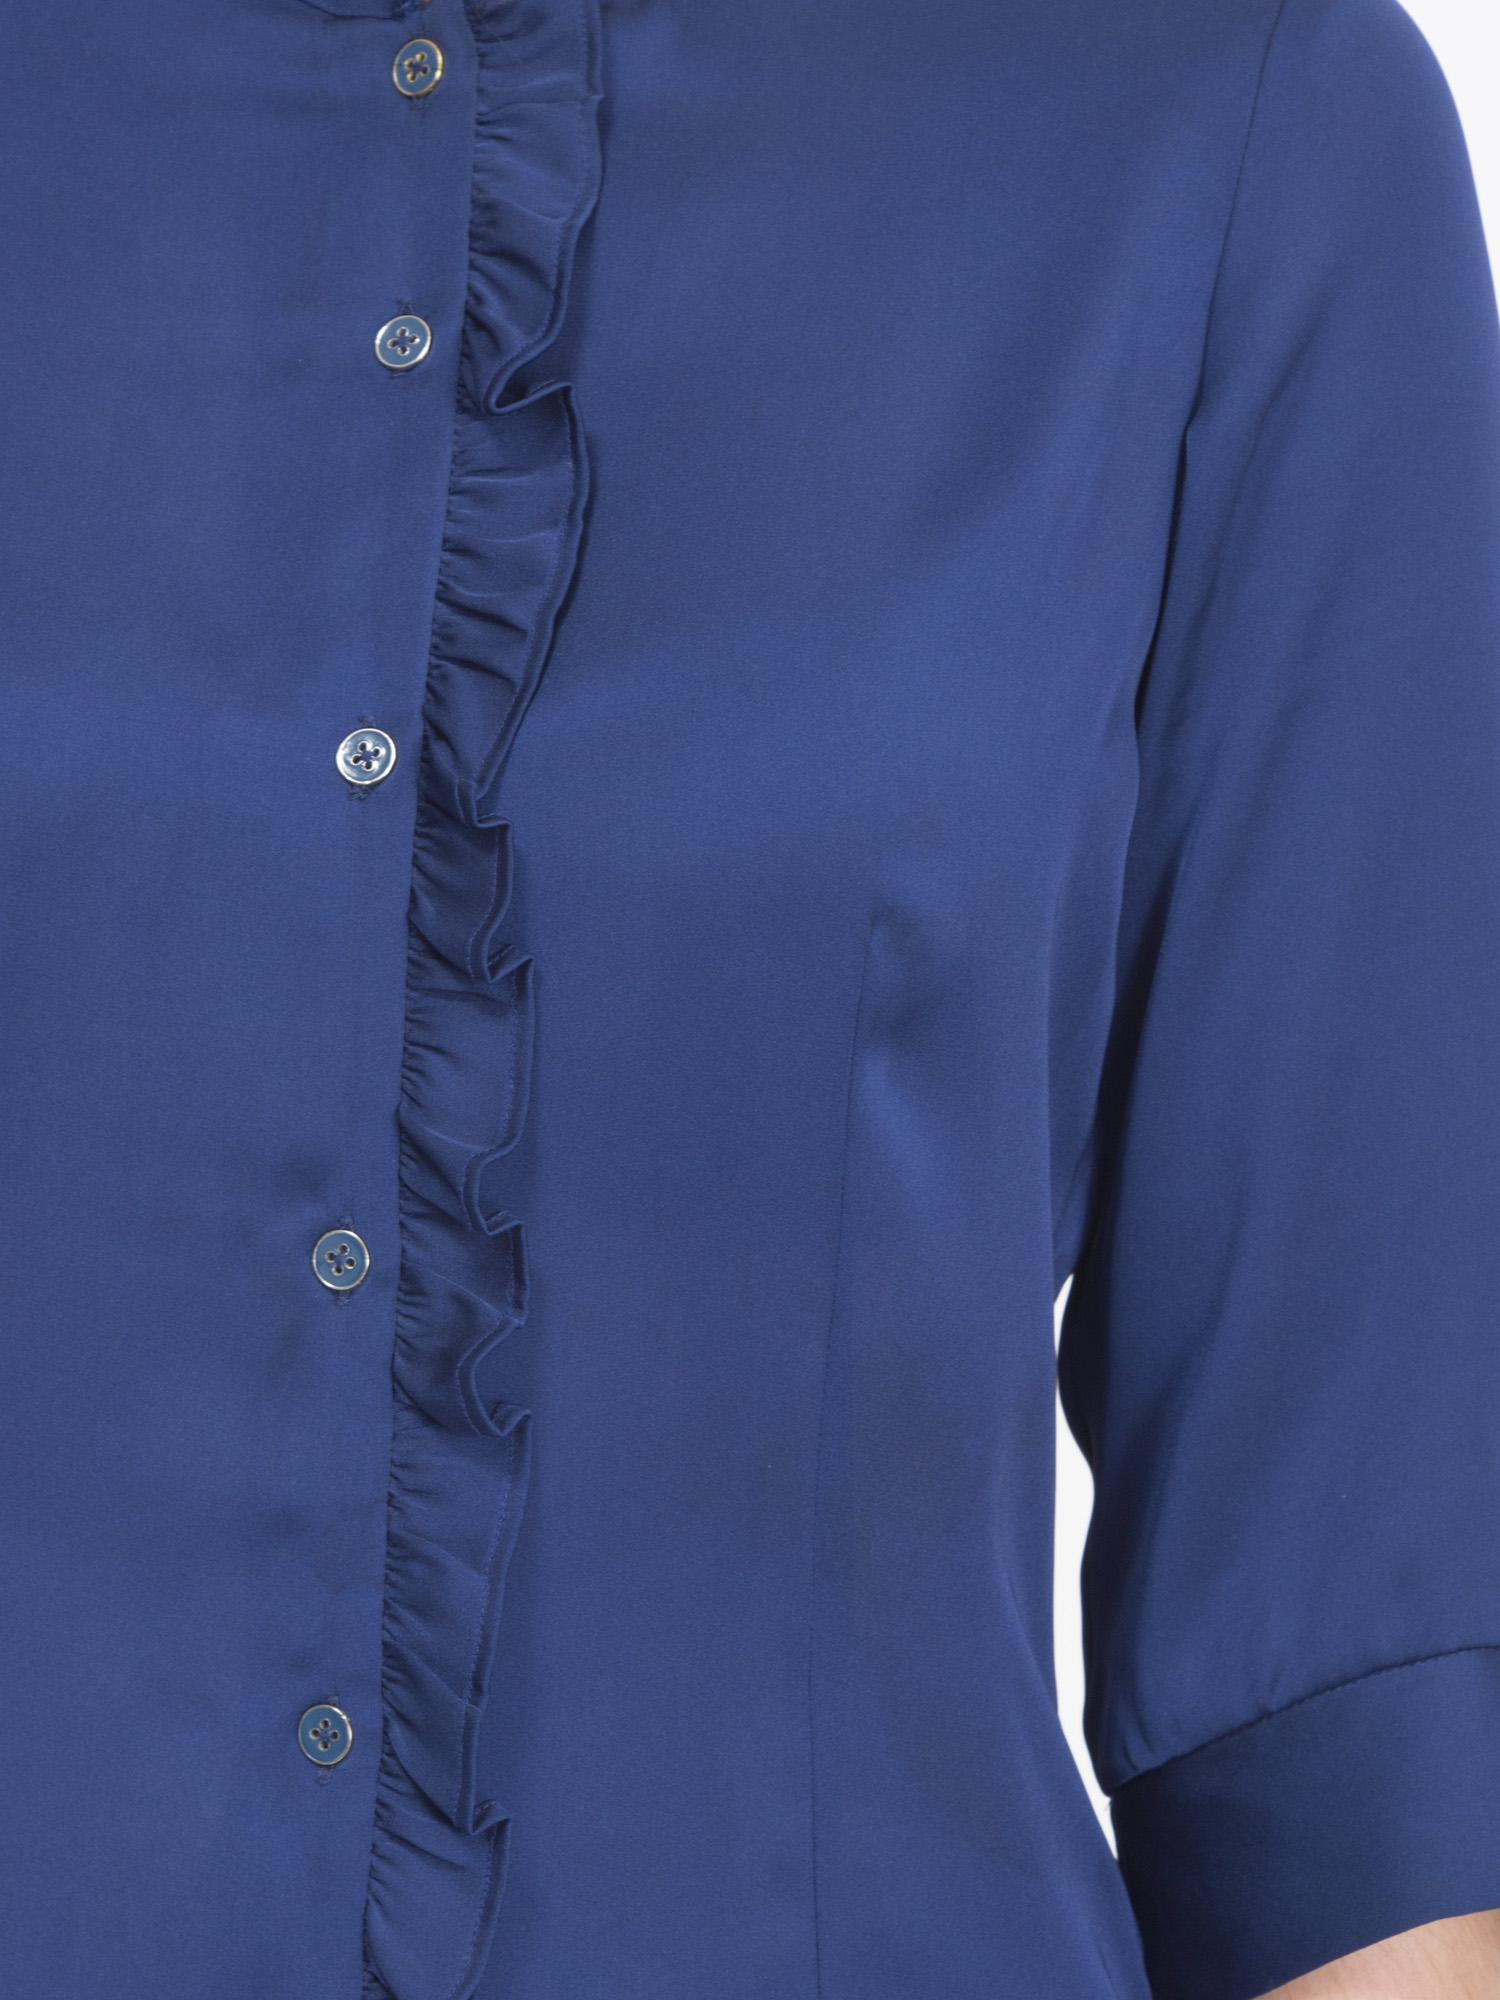 Blue Placket Ruffle Shirt - Back